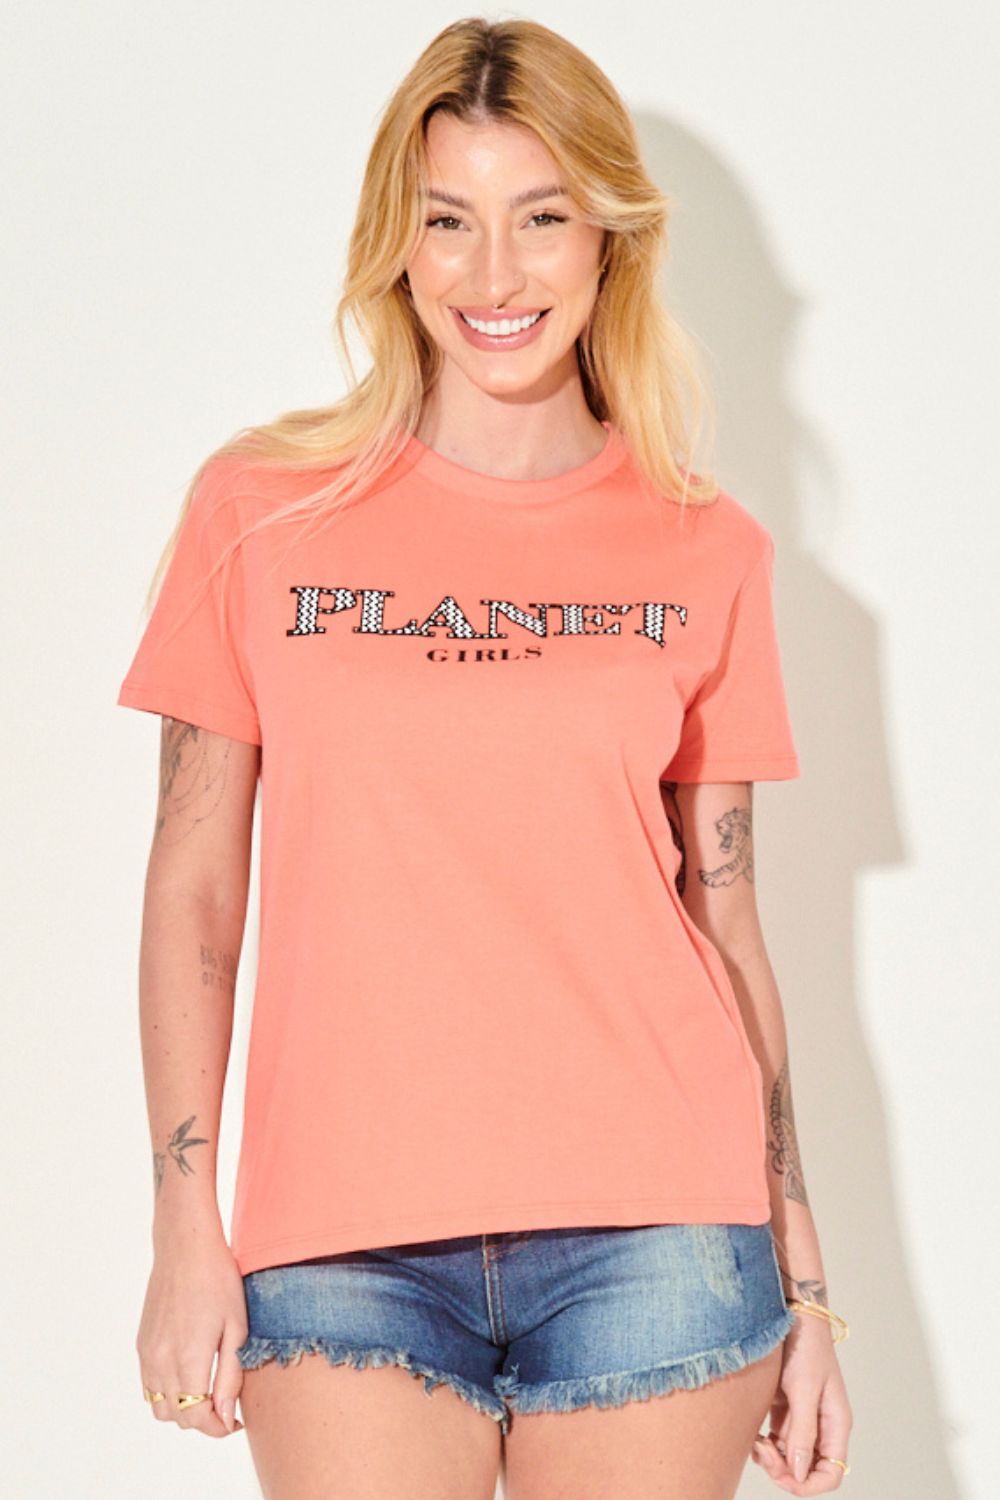 Camiseta Feminina Estampa Logo Estilizado Planet Girls - Planet Girls